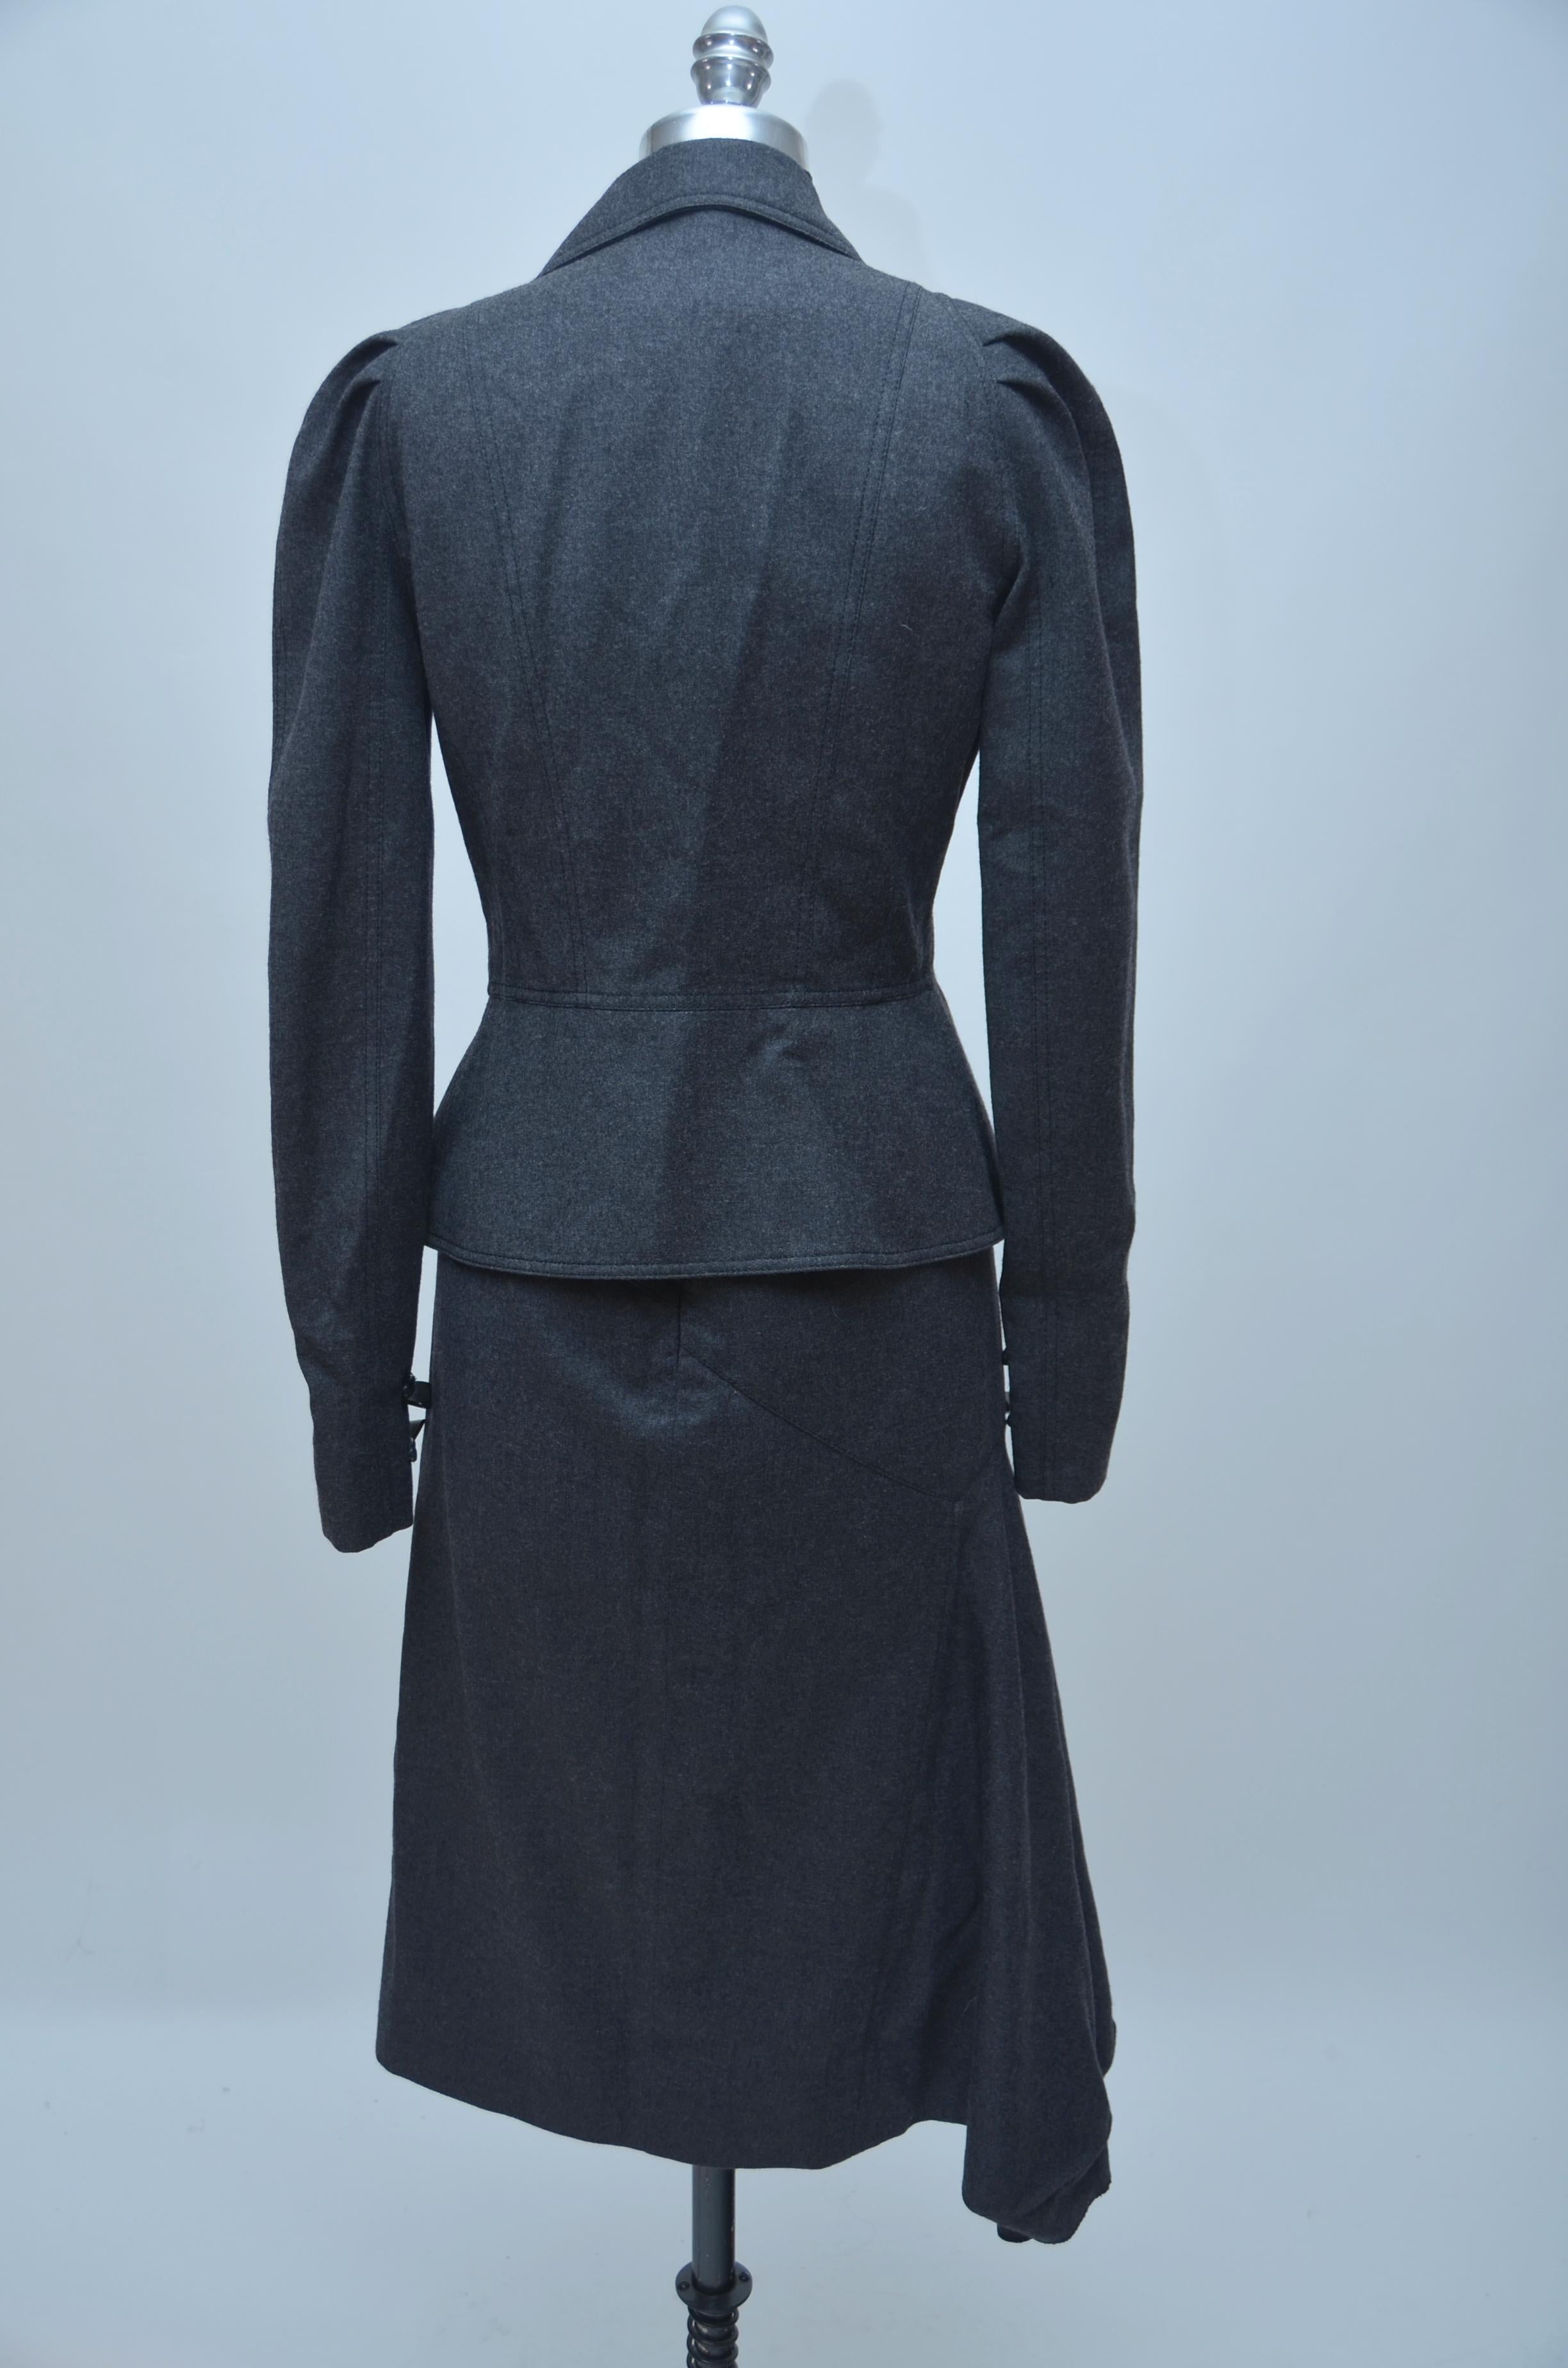 John Galliano suit
Size 6US
Excellent condition
Skirt:
Waist 29